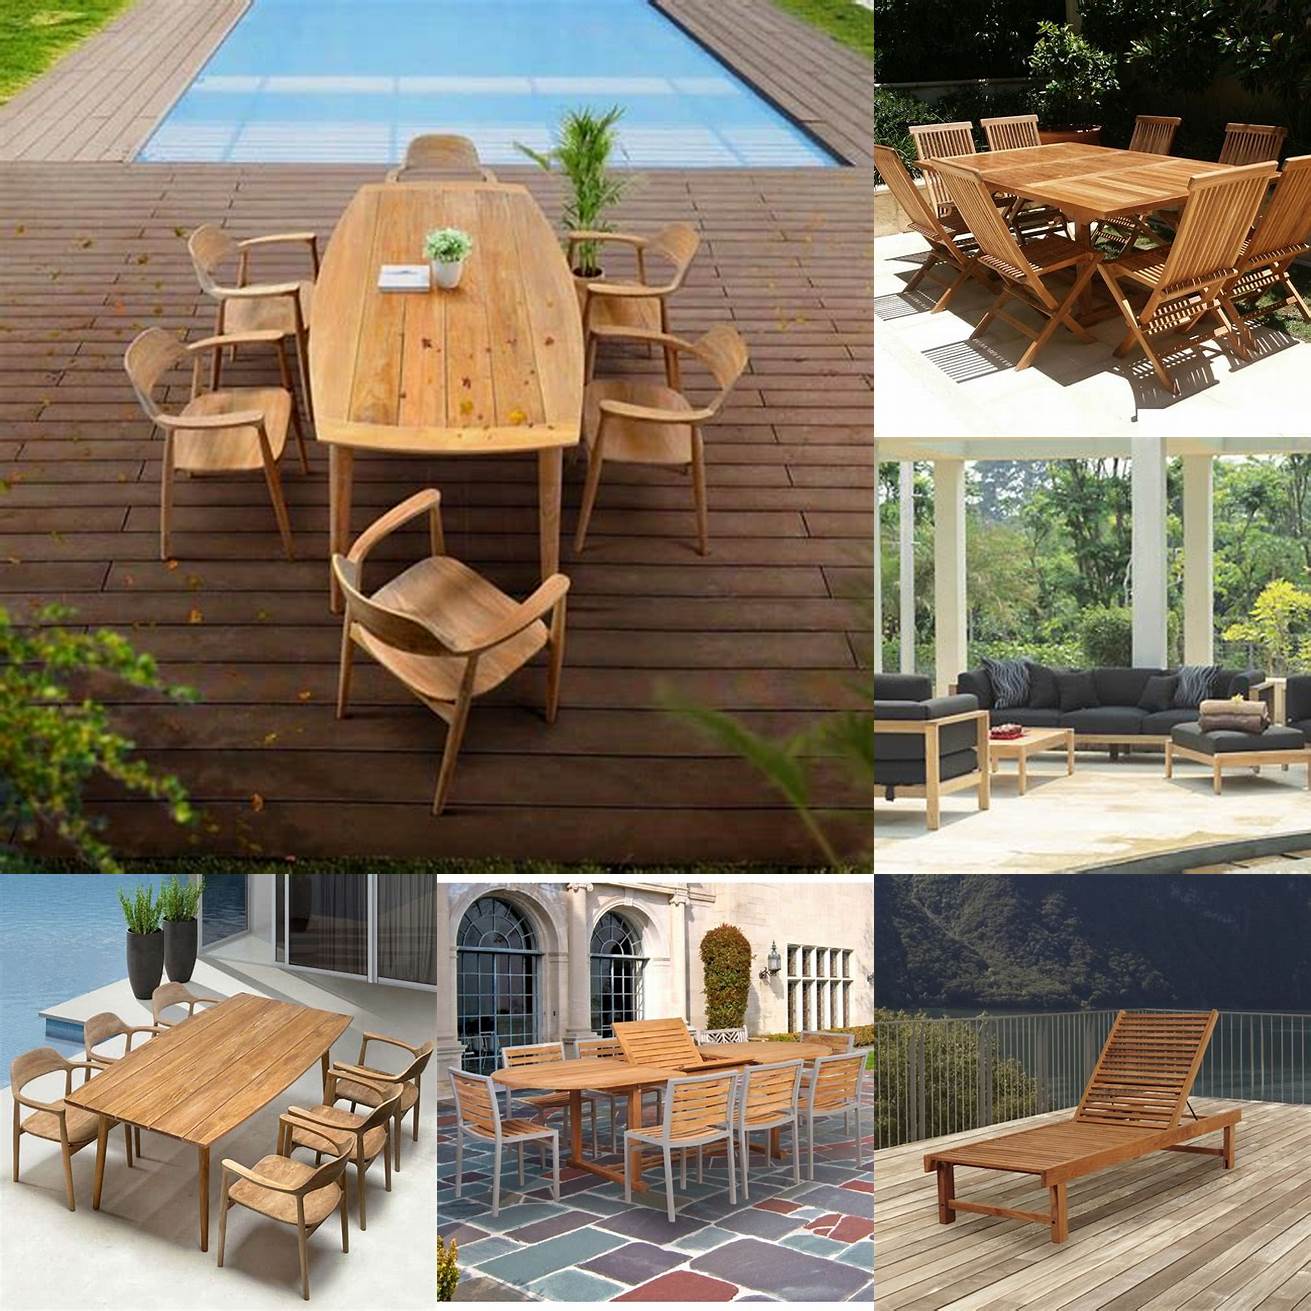 Modern Teak Outdoor Furniture